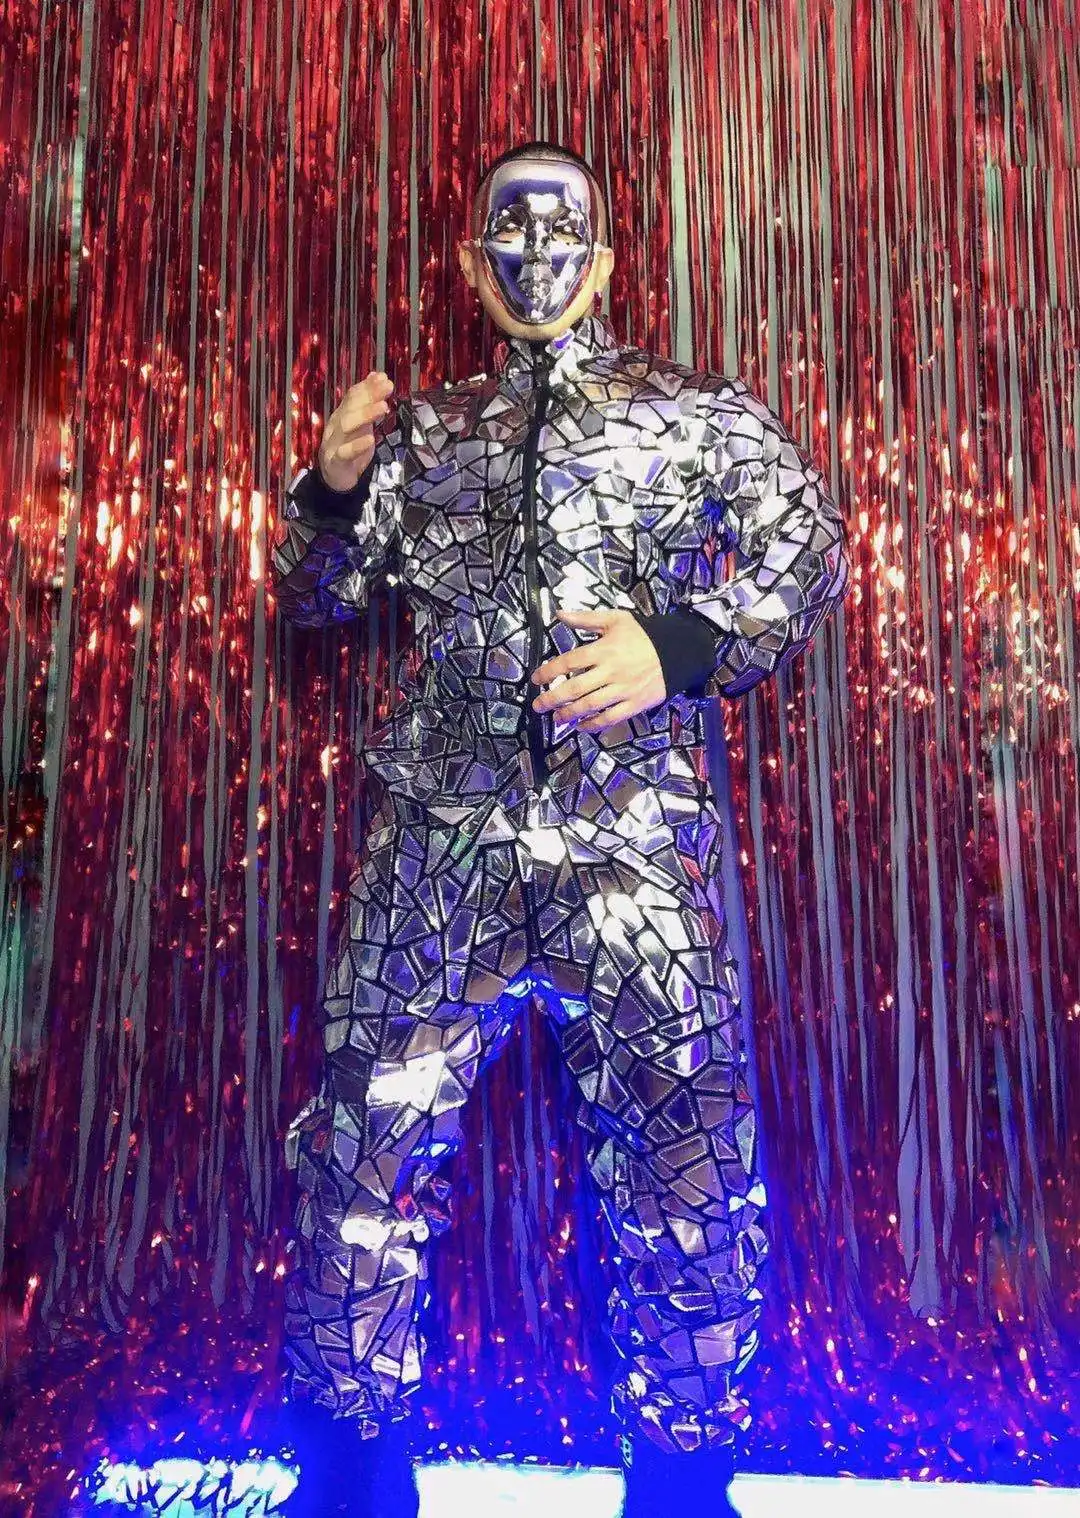 Long Sleeve Silver Sequins Loose Jumpsuit Male Singer Dancer Reflective Laser Costume Overalls Rock Hip Hop Performance Clothes